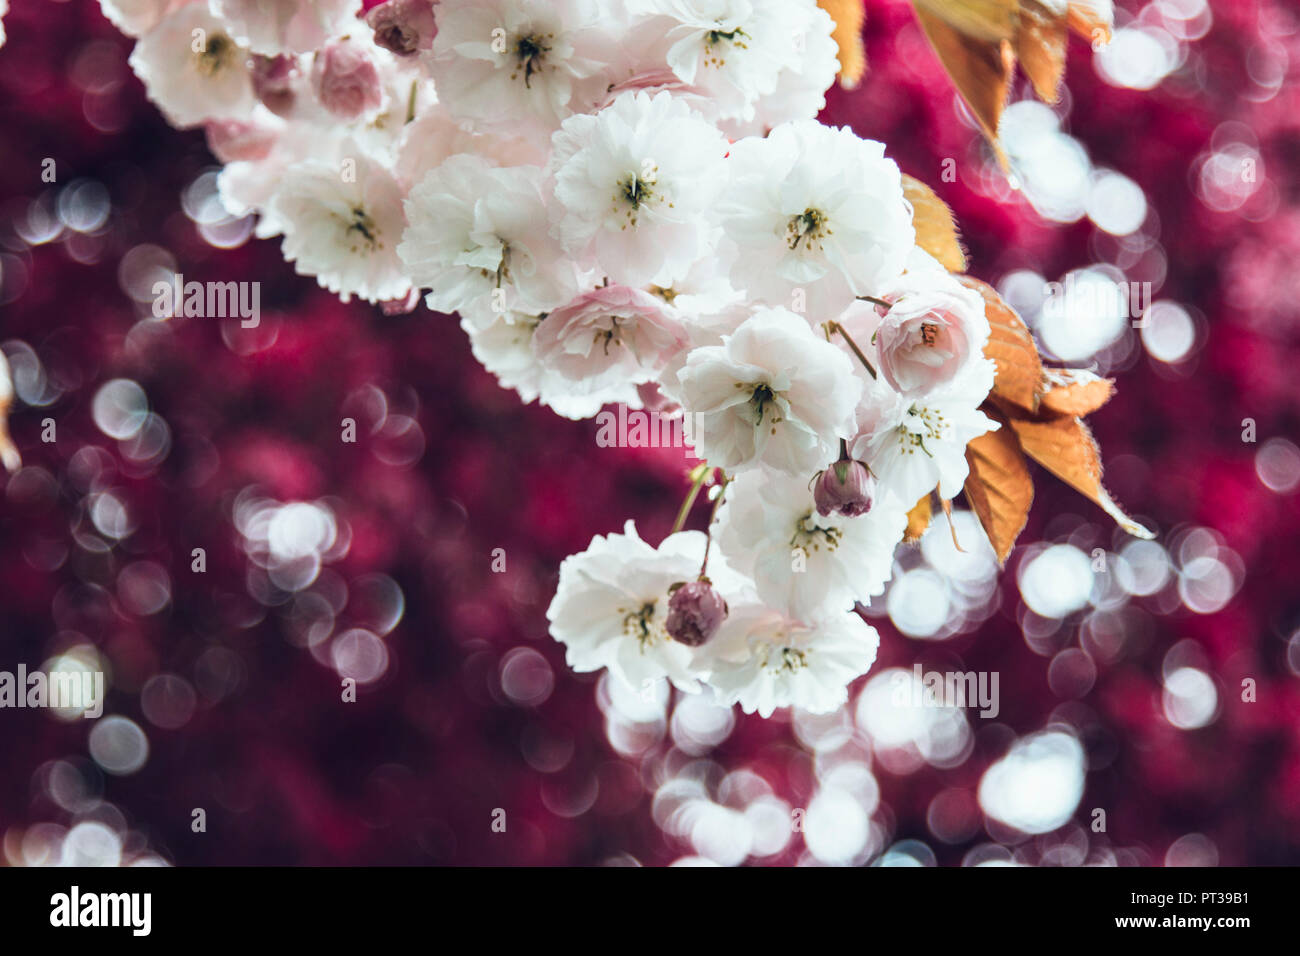 Crabapple tree in piena fioritura, Malus "royalty" Foto Stock